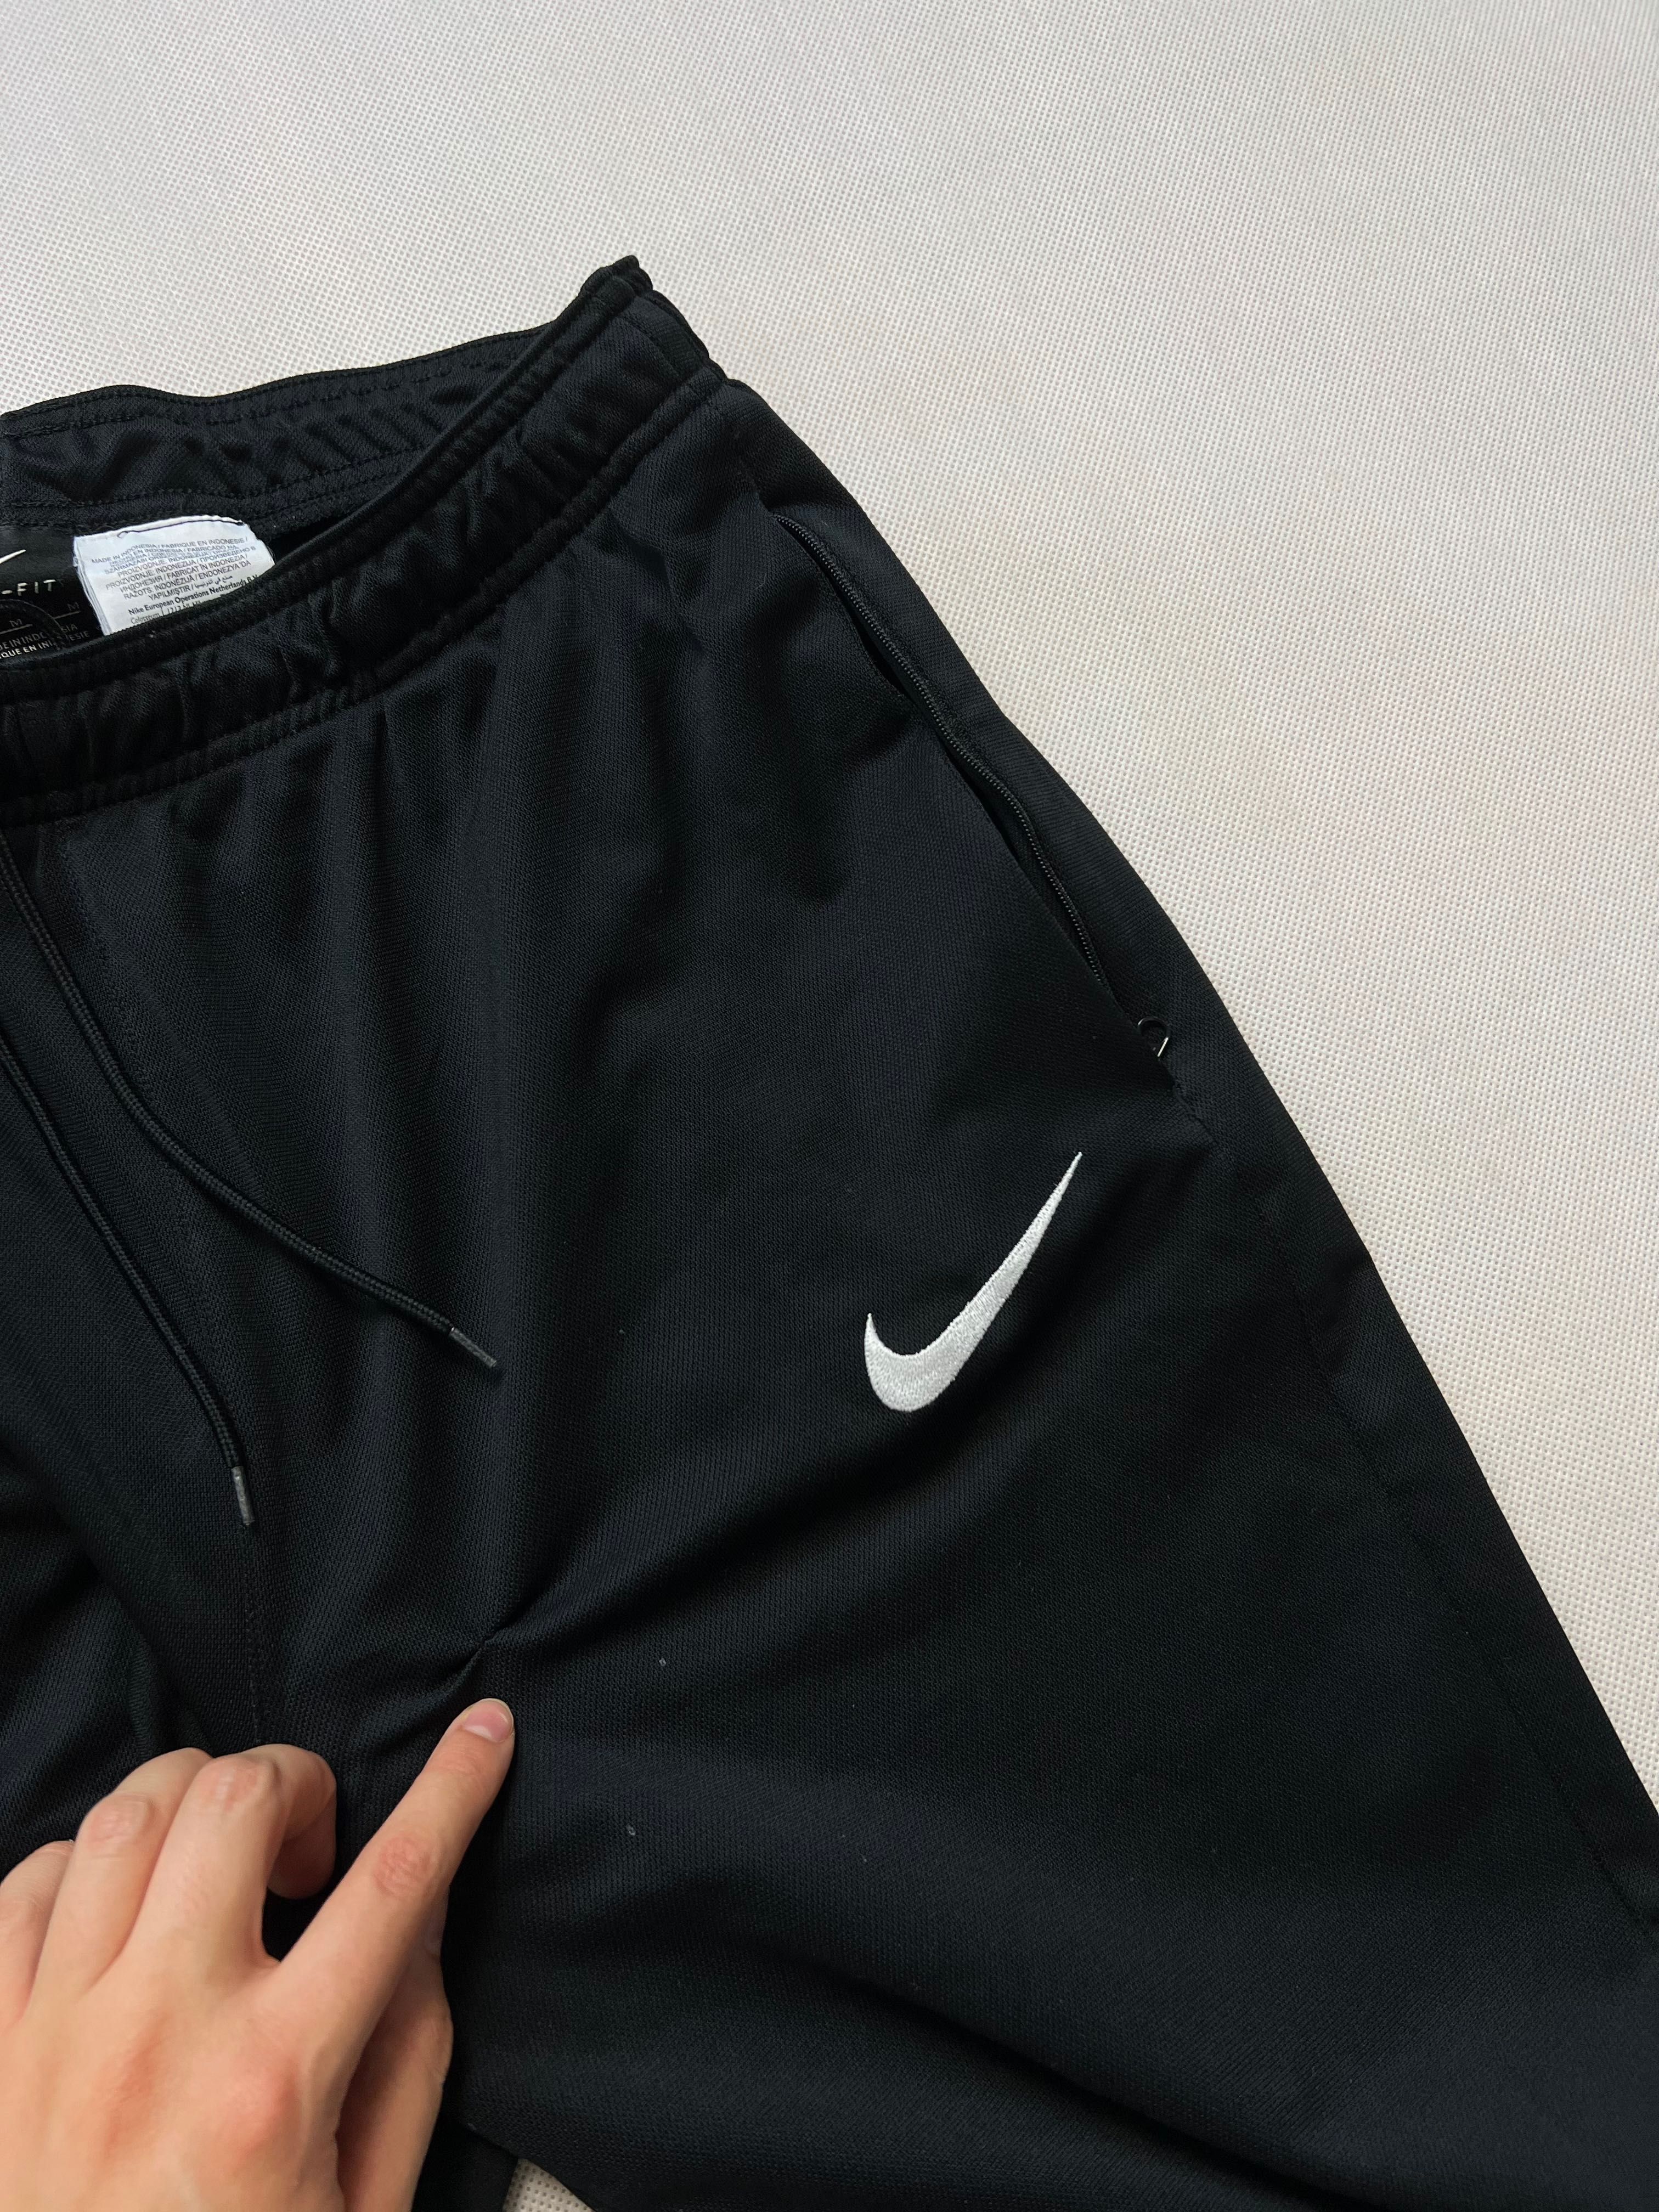 Trousers Tracksuits Nike swoosh logo black